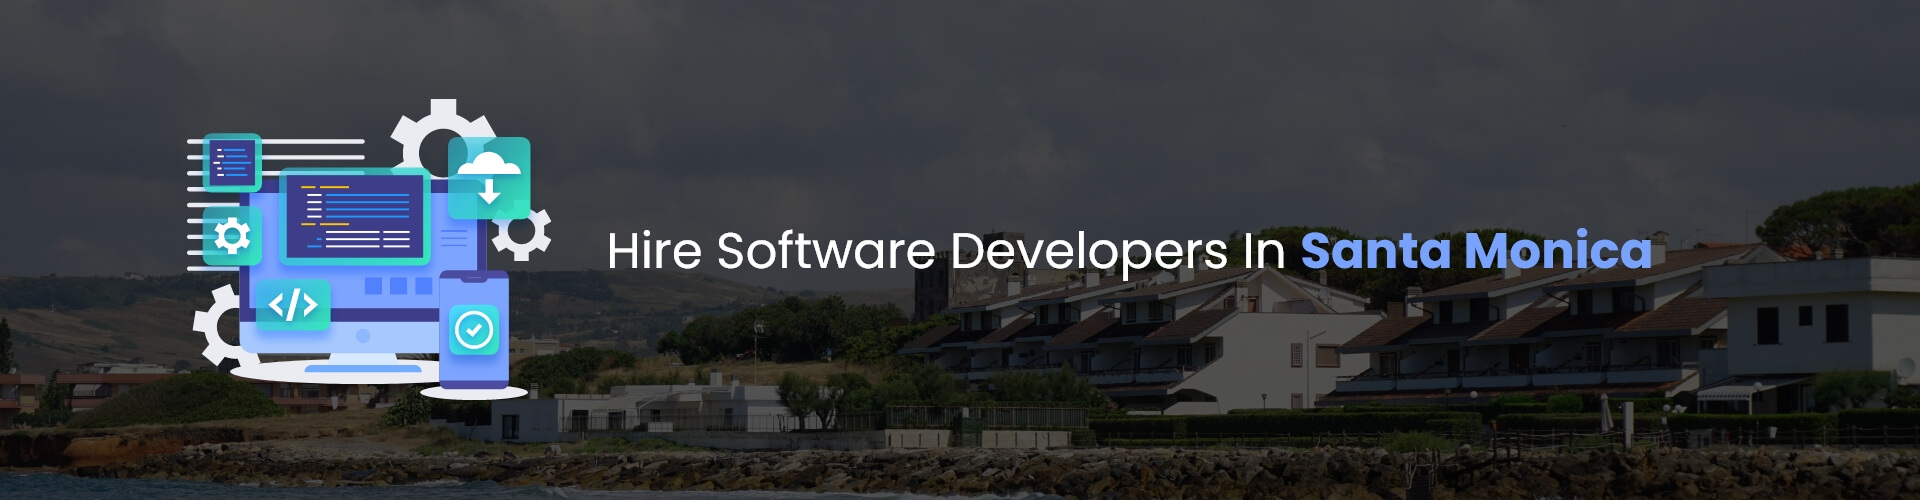 hire software developers in santa monica